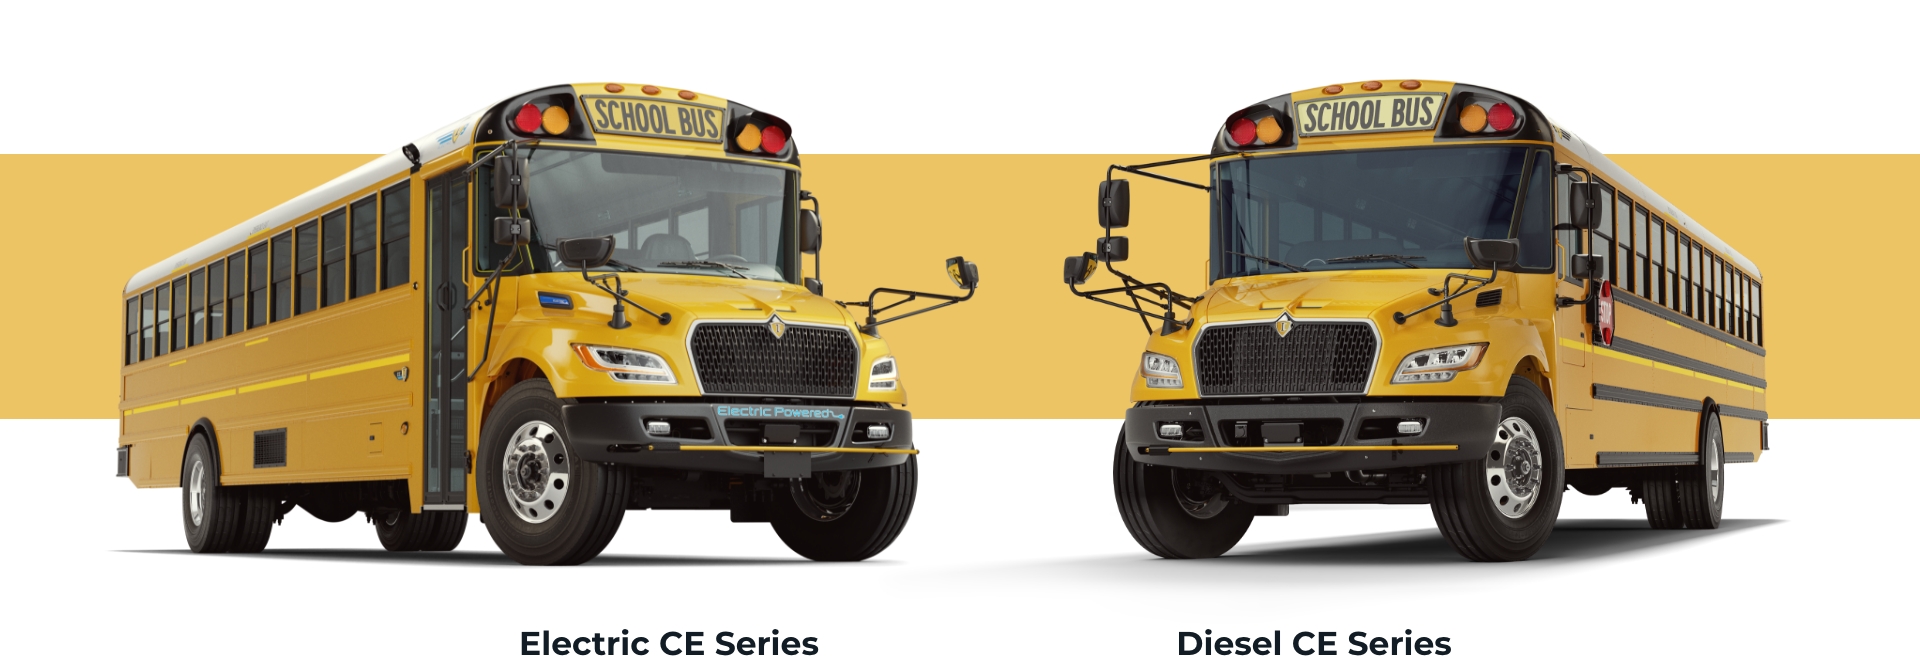 Yellow school bus side by side